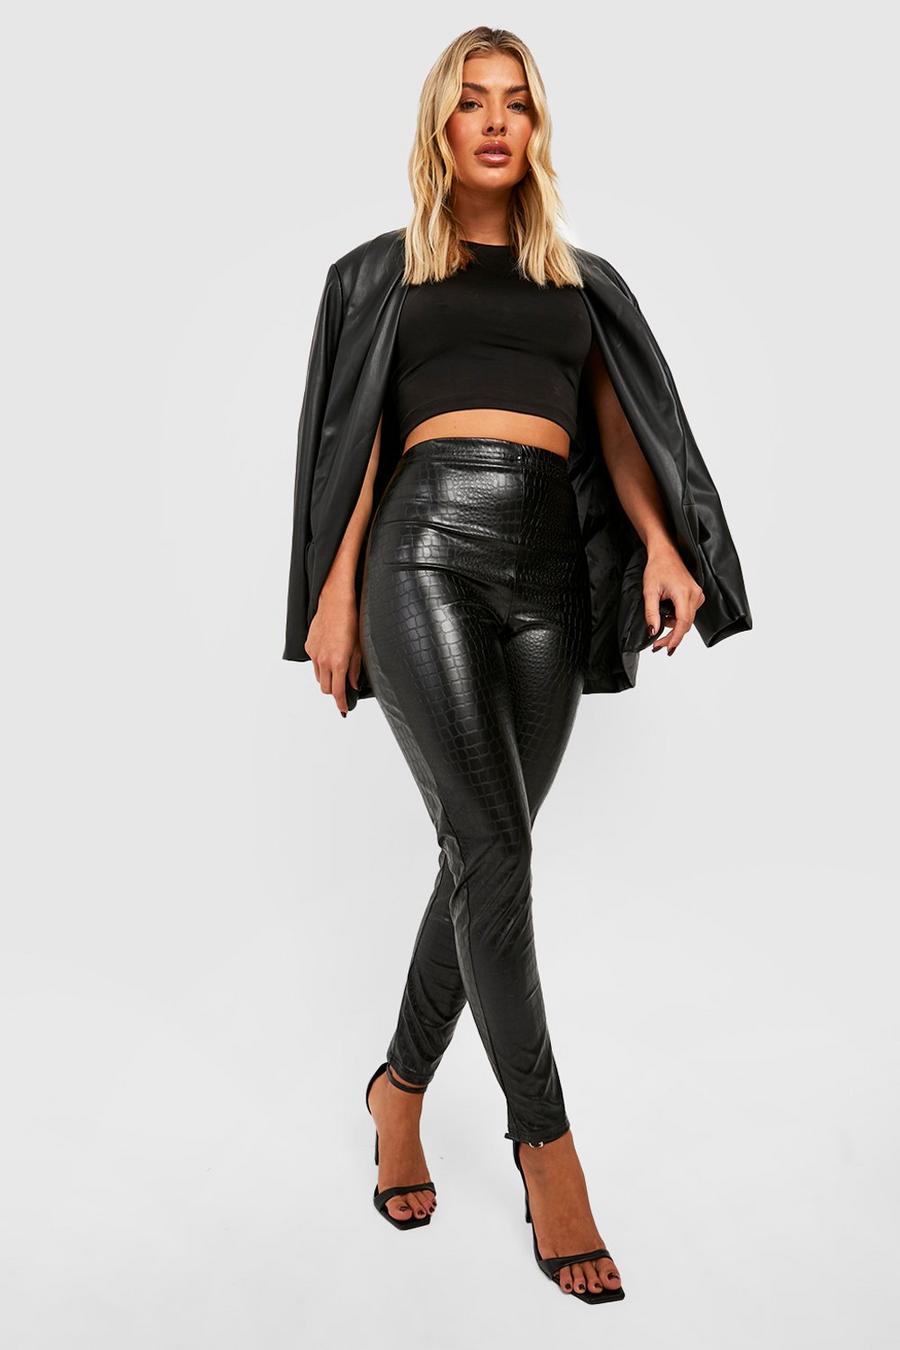 https://media.boohoo.com/i/boohoo/fzz38266_black_xl/female-black-faux-leather-croc-leggings/?w=900&qlt=default&fmt.jp2.qlt=70&fmt=auto&sm=fit